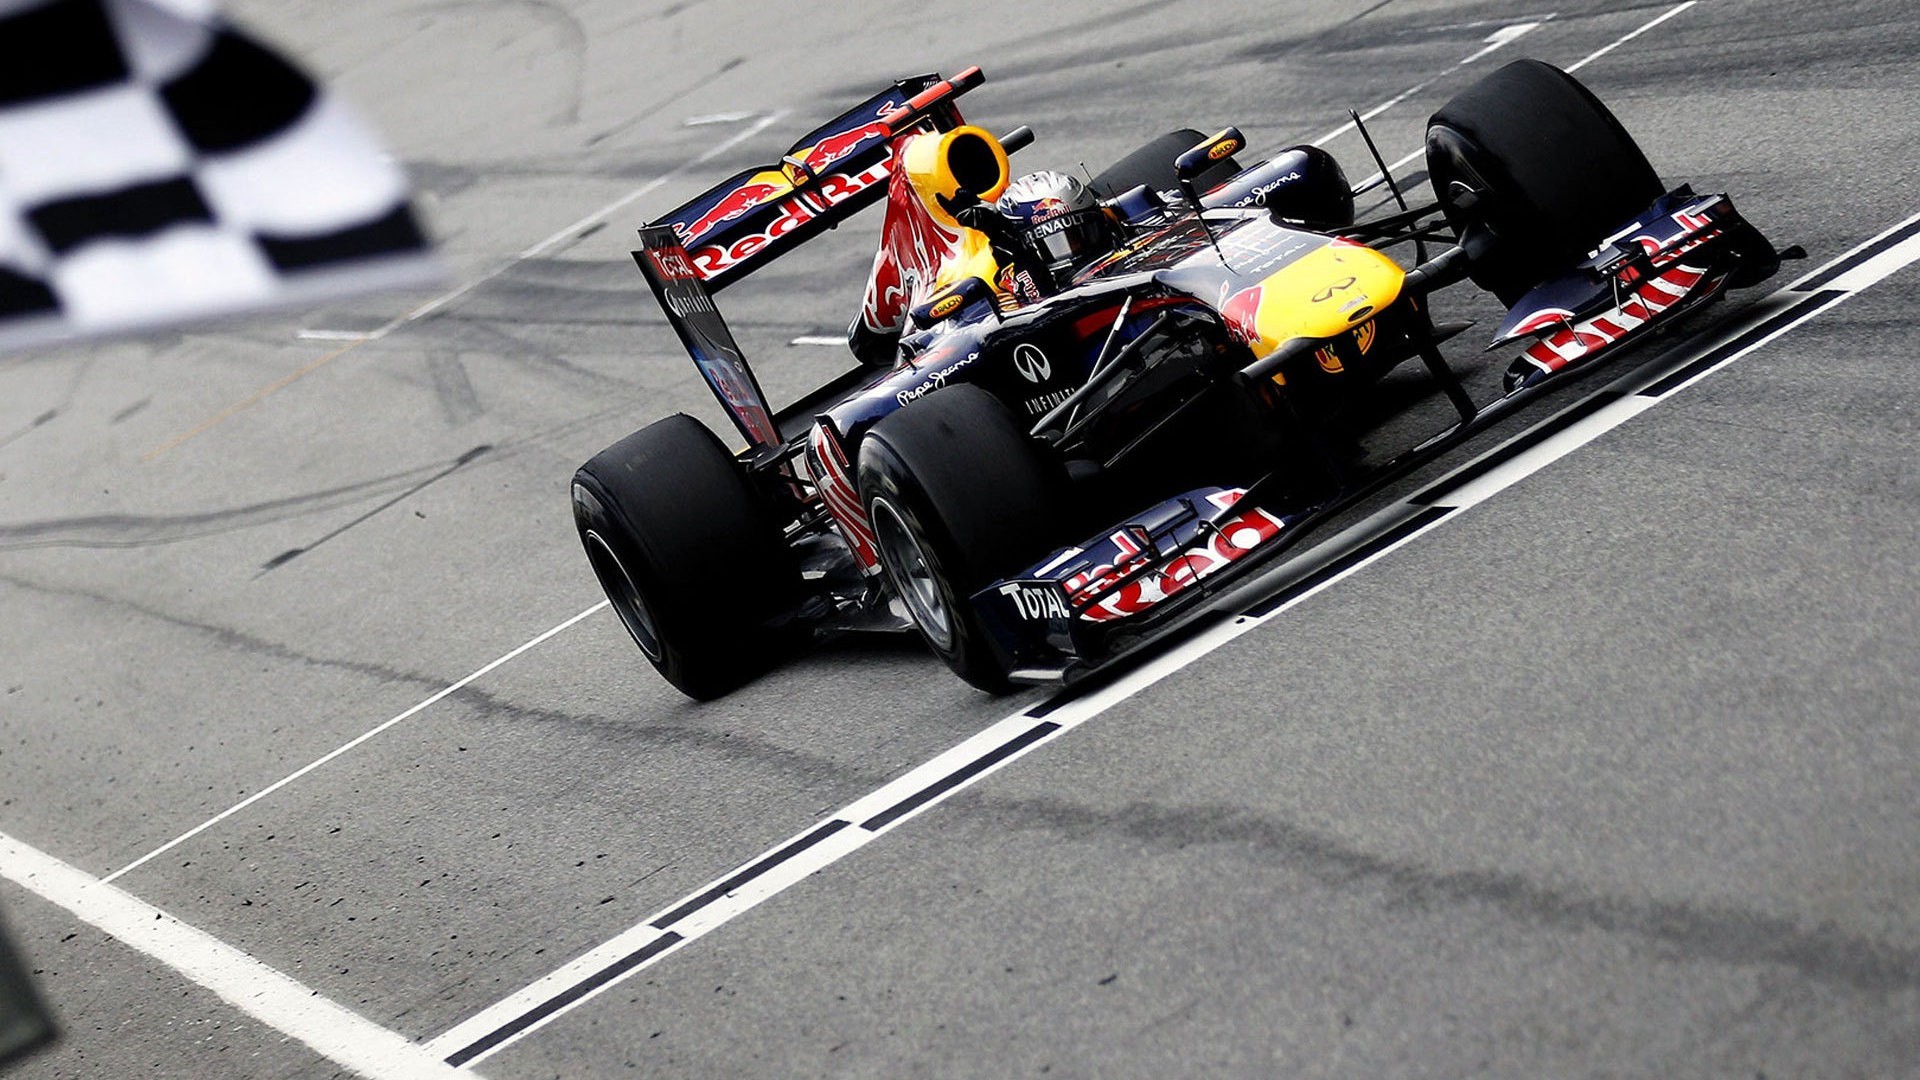 General 1920x1080 Formula 1 Red Bull Racing car racing race cars vehicle sport motorsport